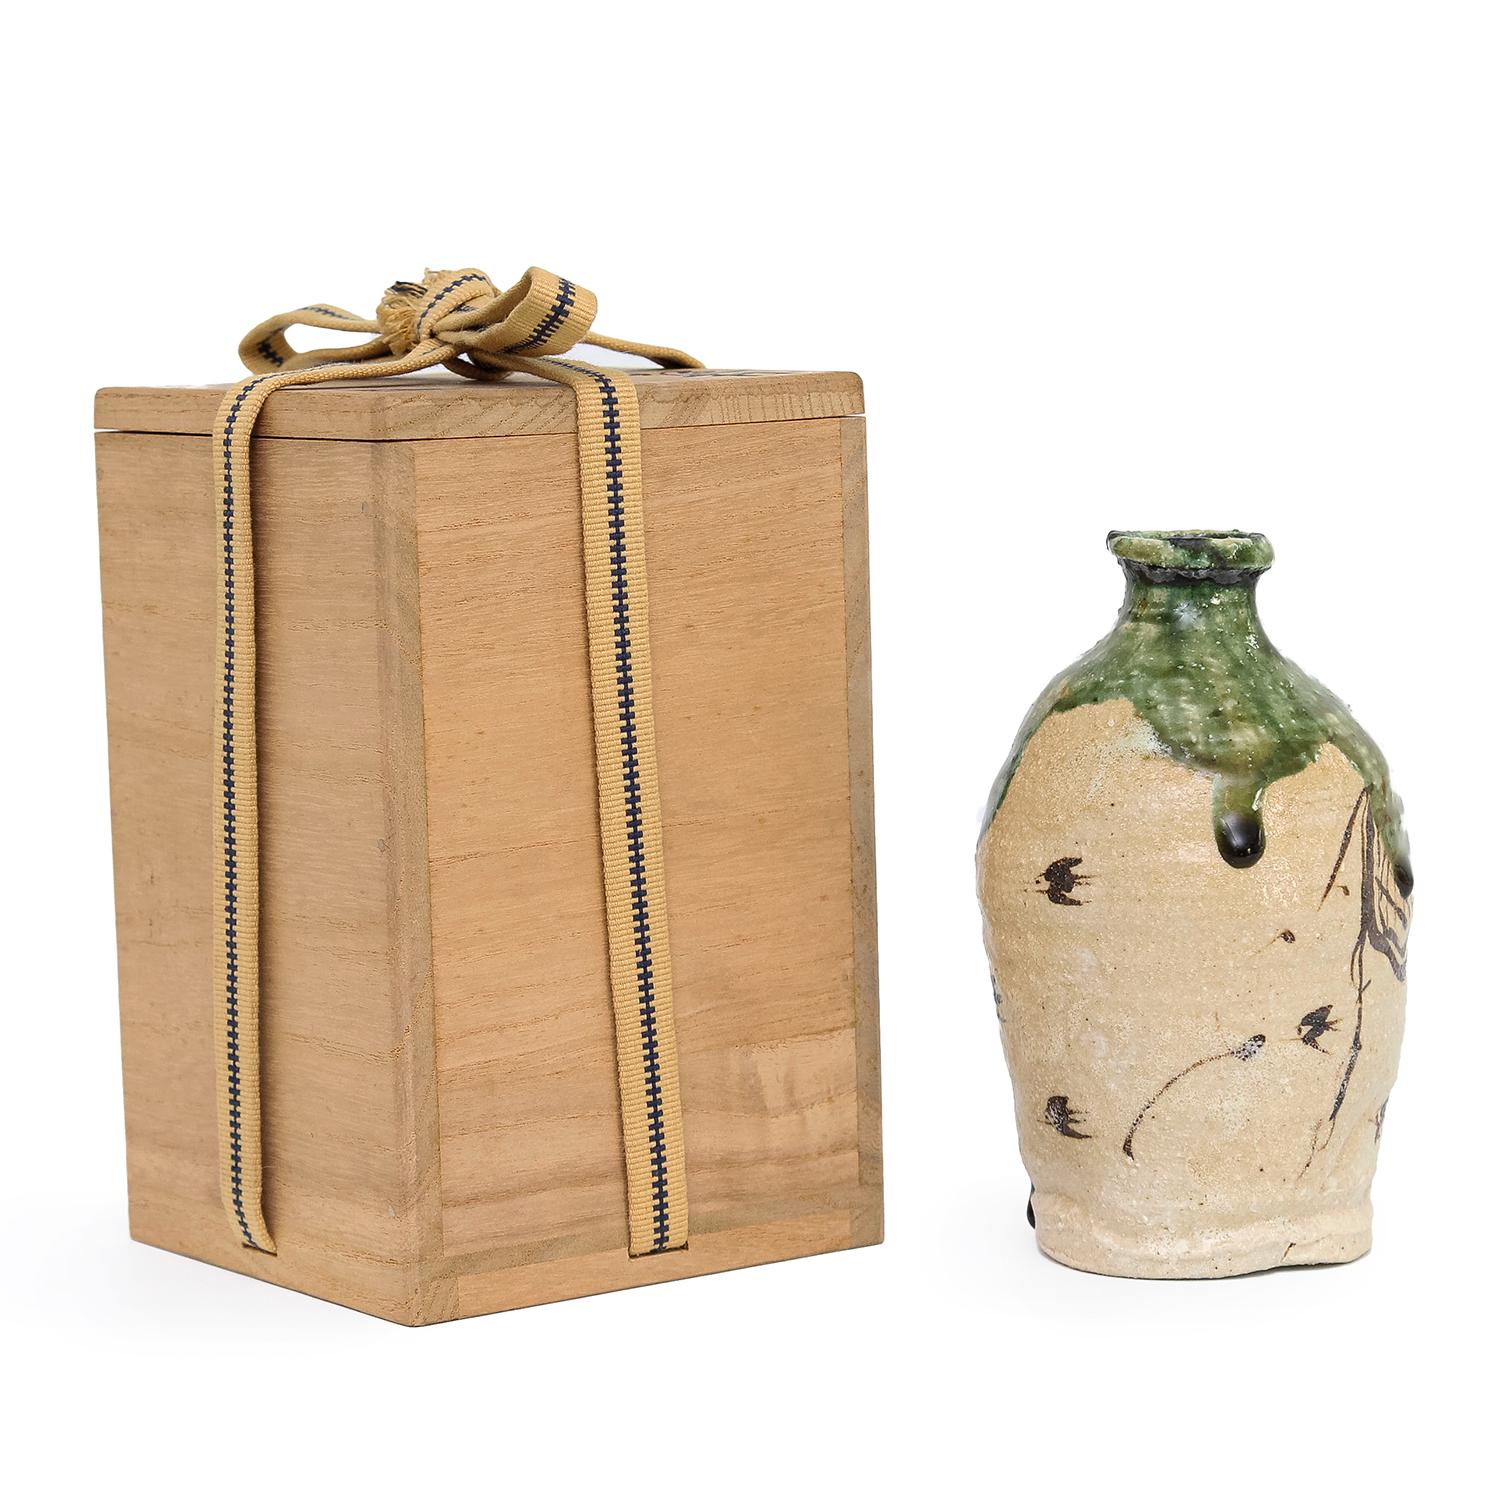 Suzuki Goro 
Oribe Sake Bottle with Box (INV# NP3436)
stoneware, underglaze and Oribe glaze
5.75 x 3.5 x 3.5